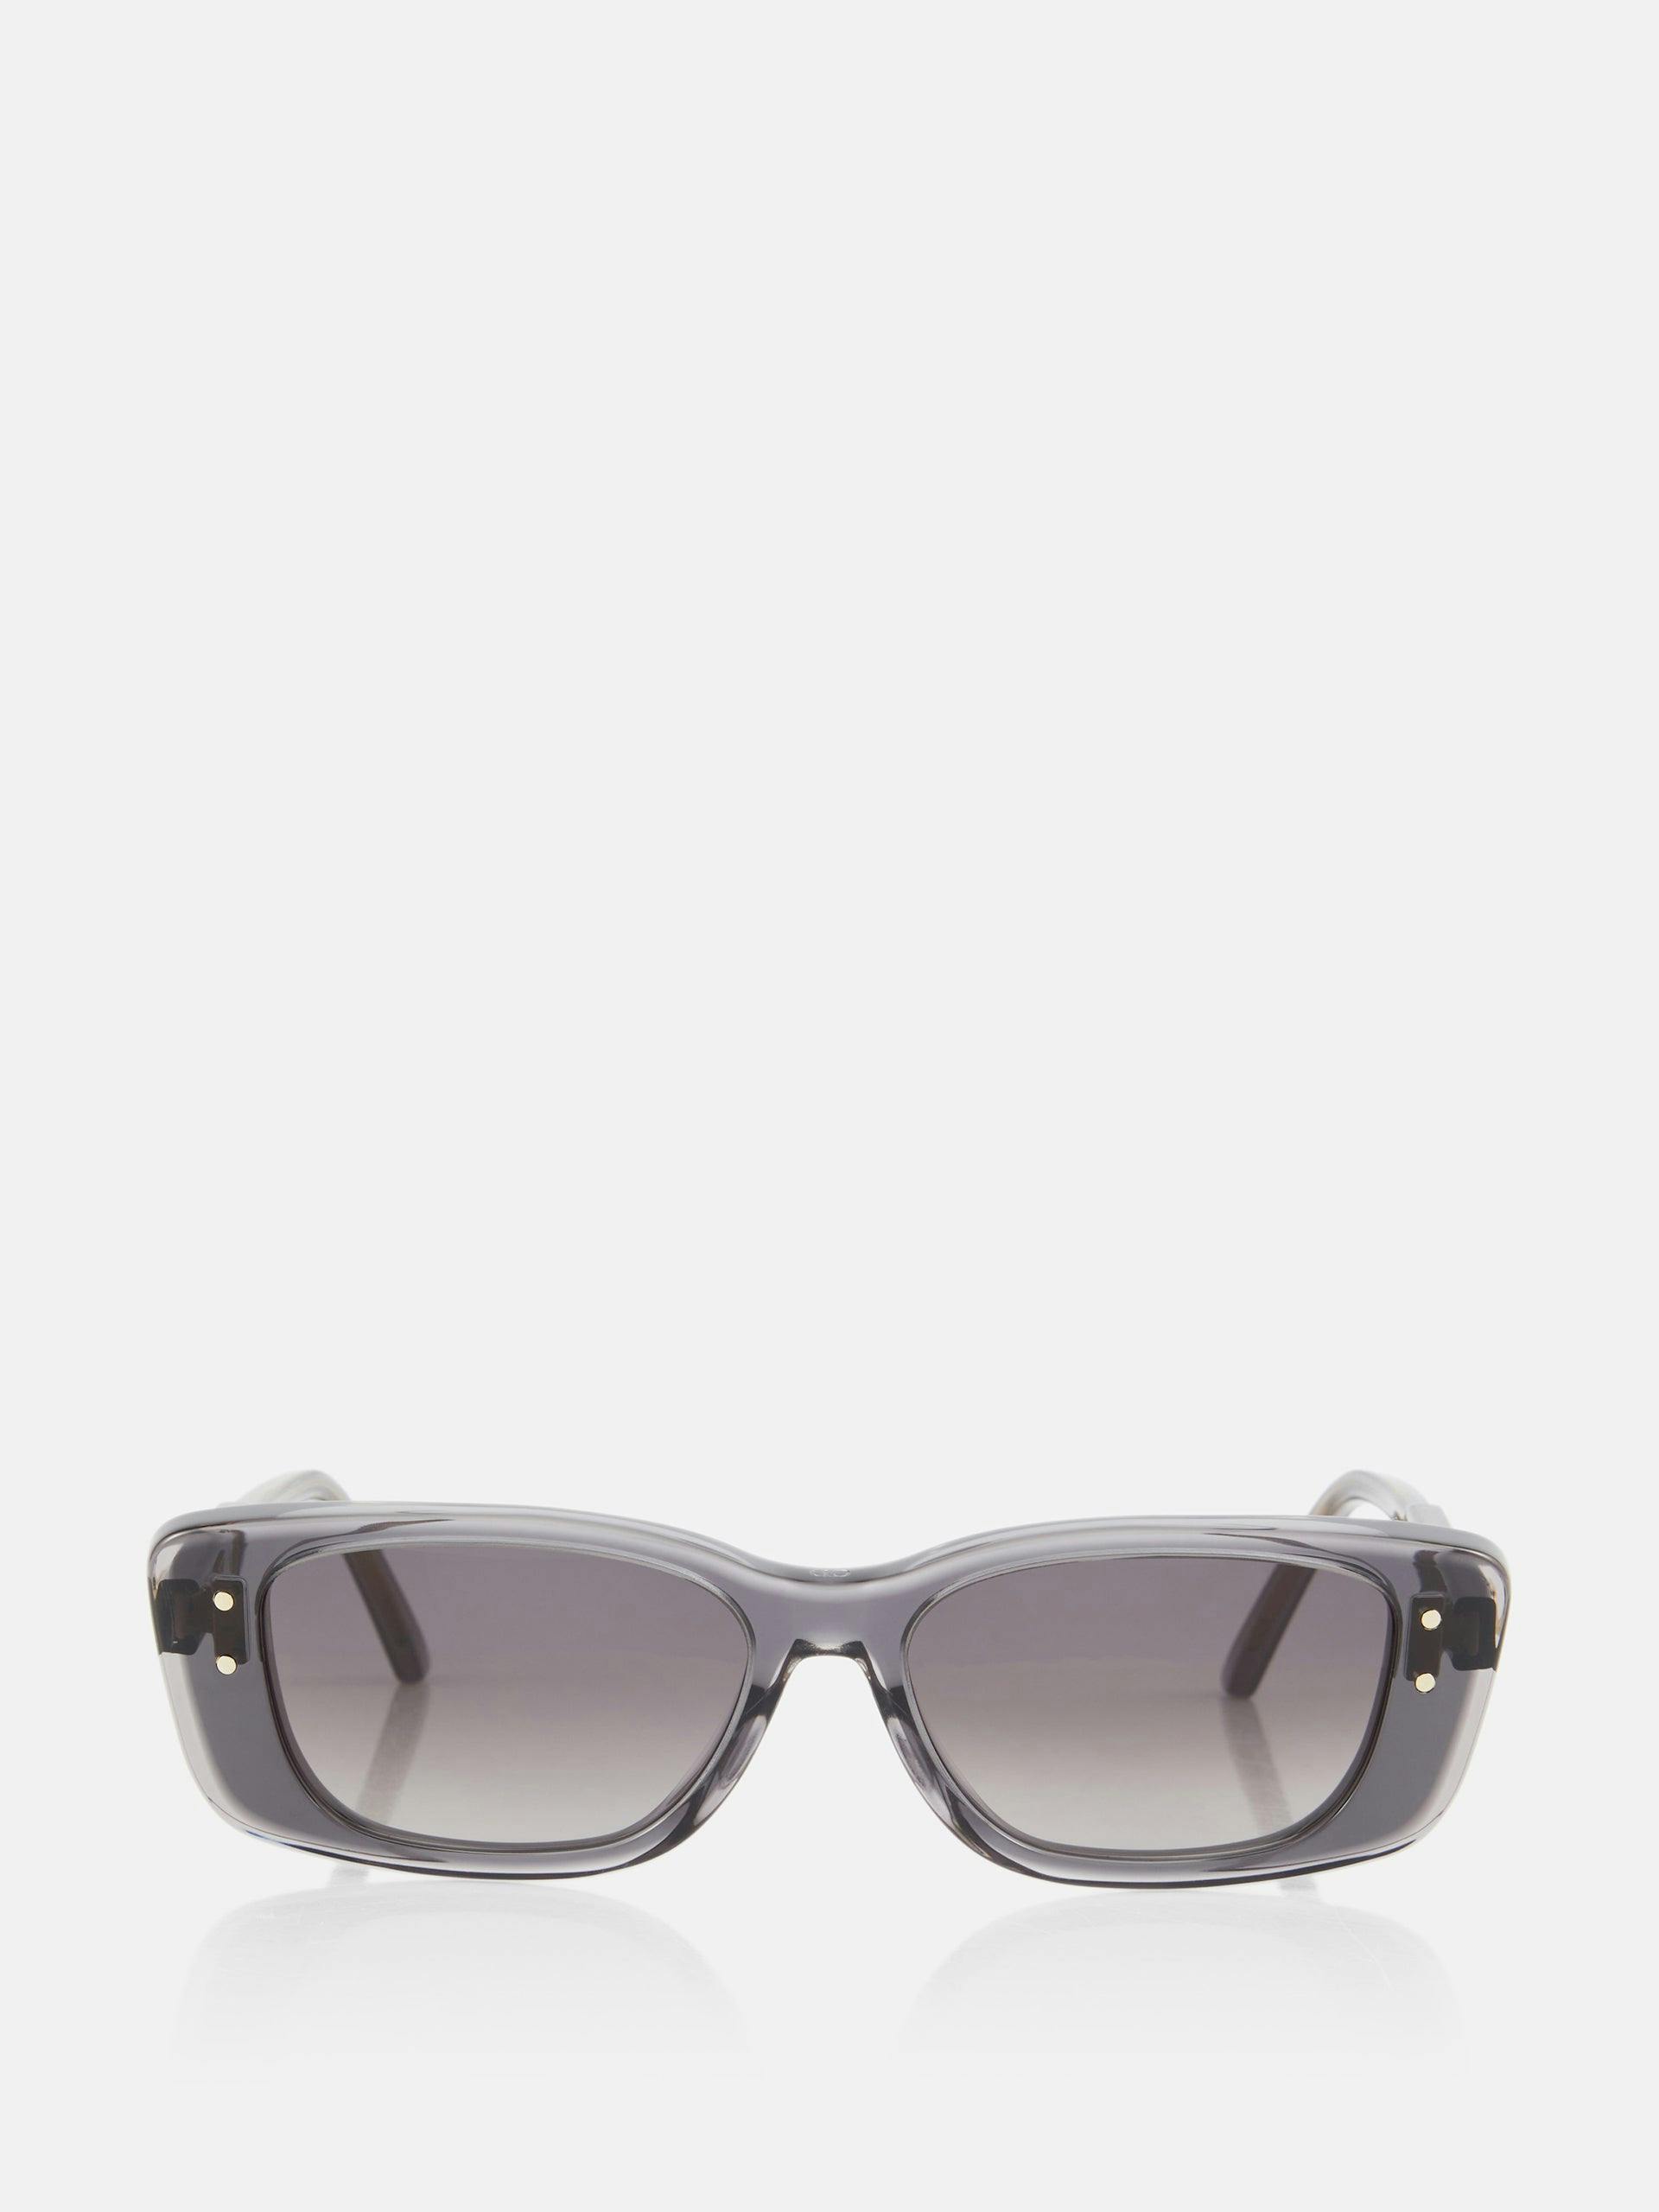 DiorHighlight S21 sunglasses